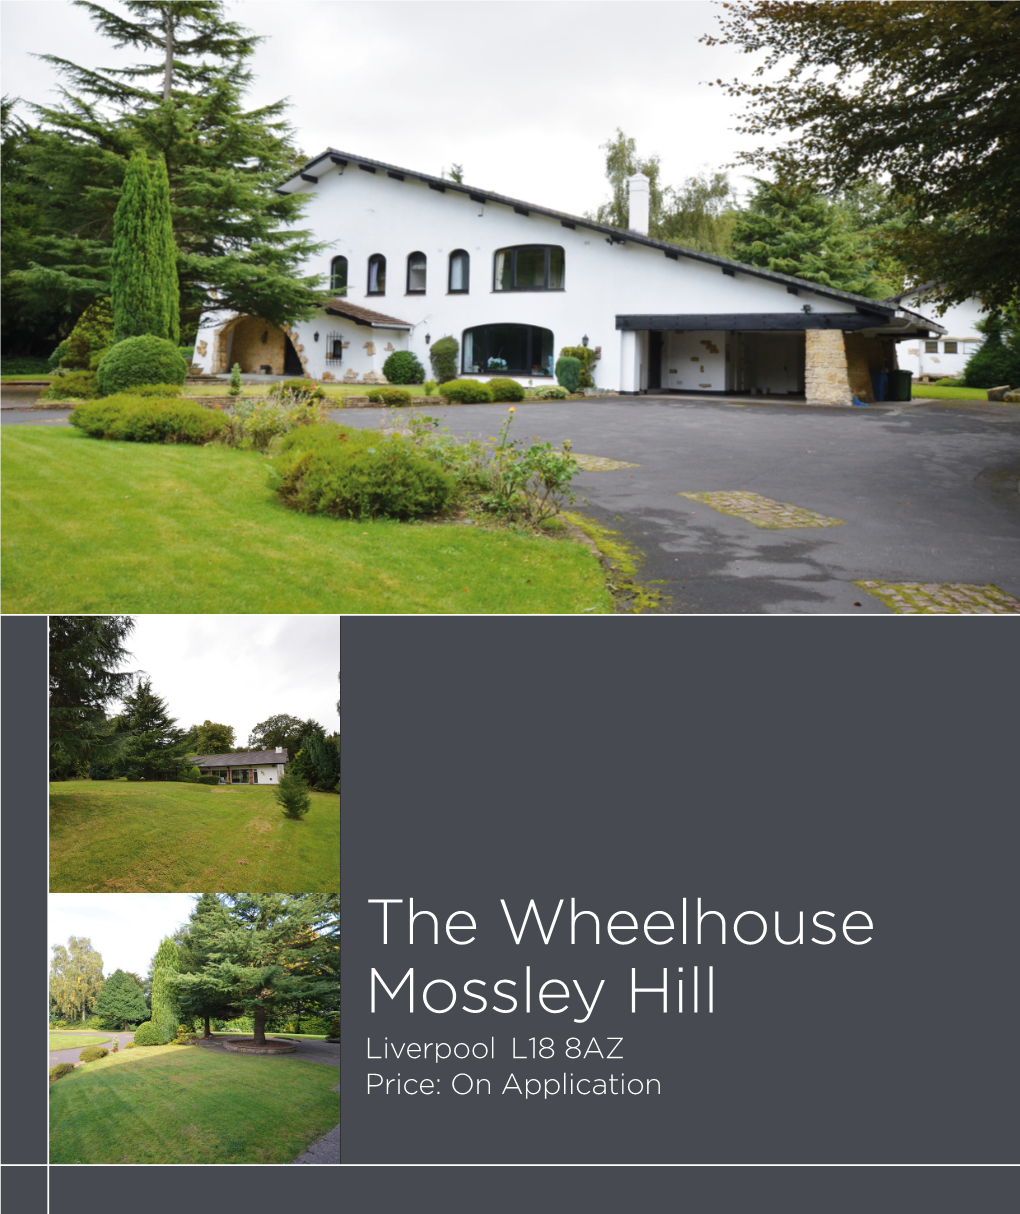 The Wheelhouse Mossley Hill